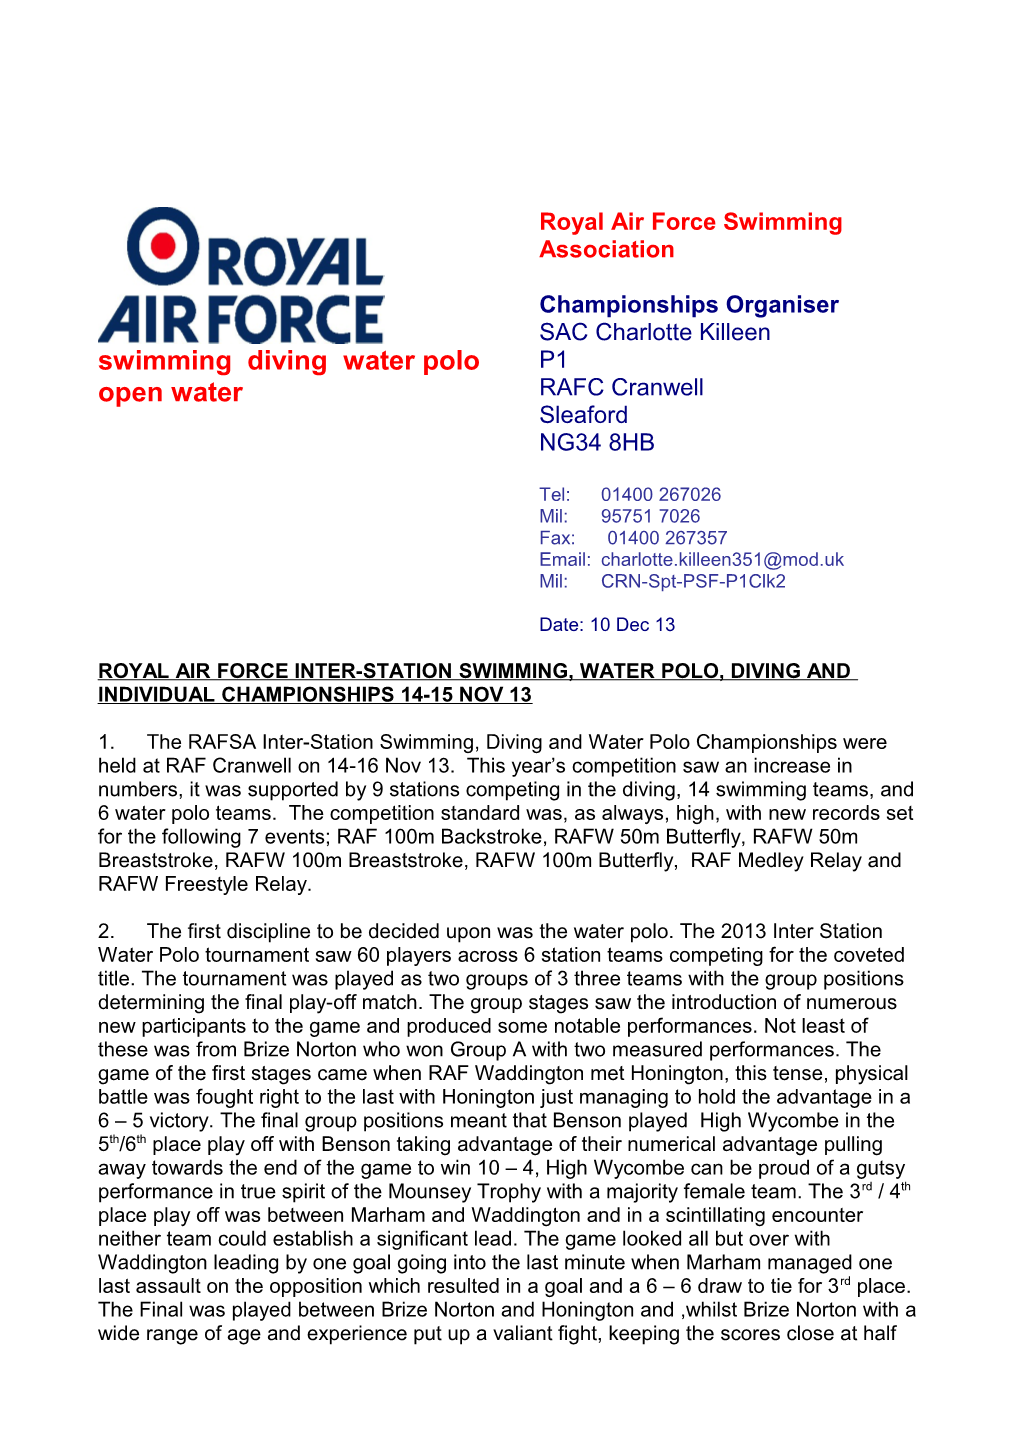 Royal Air Force Inter-Station Swimming, Water Polo, Diving and Individual Championships